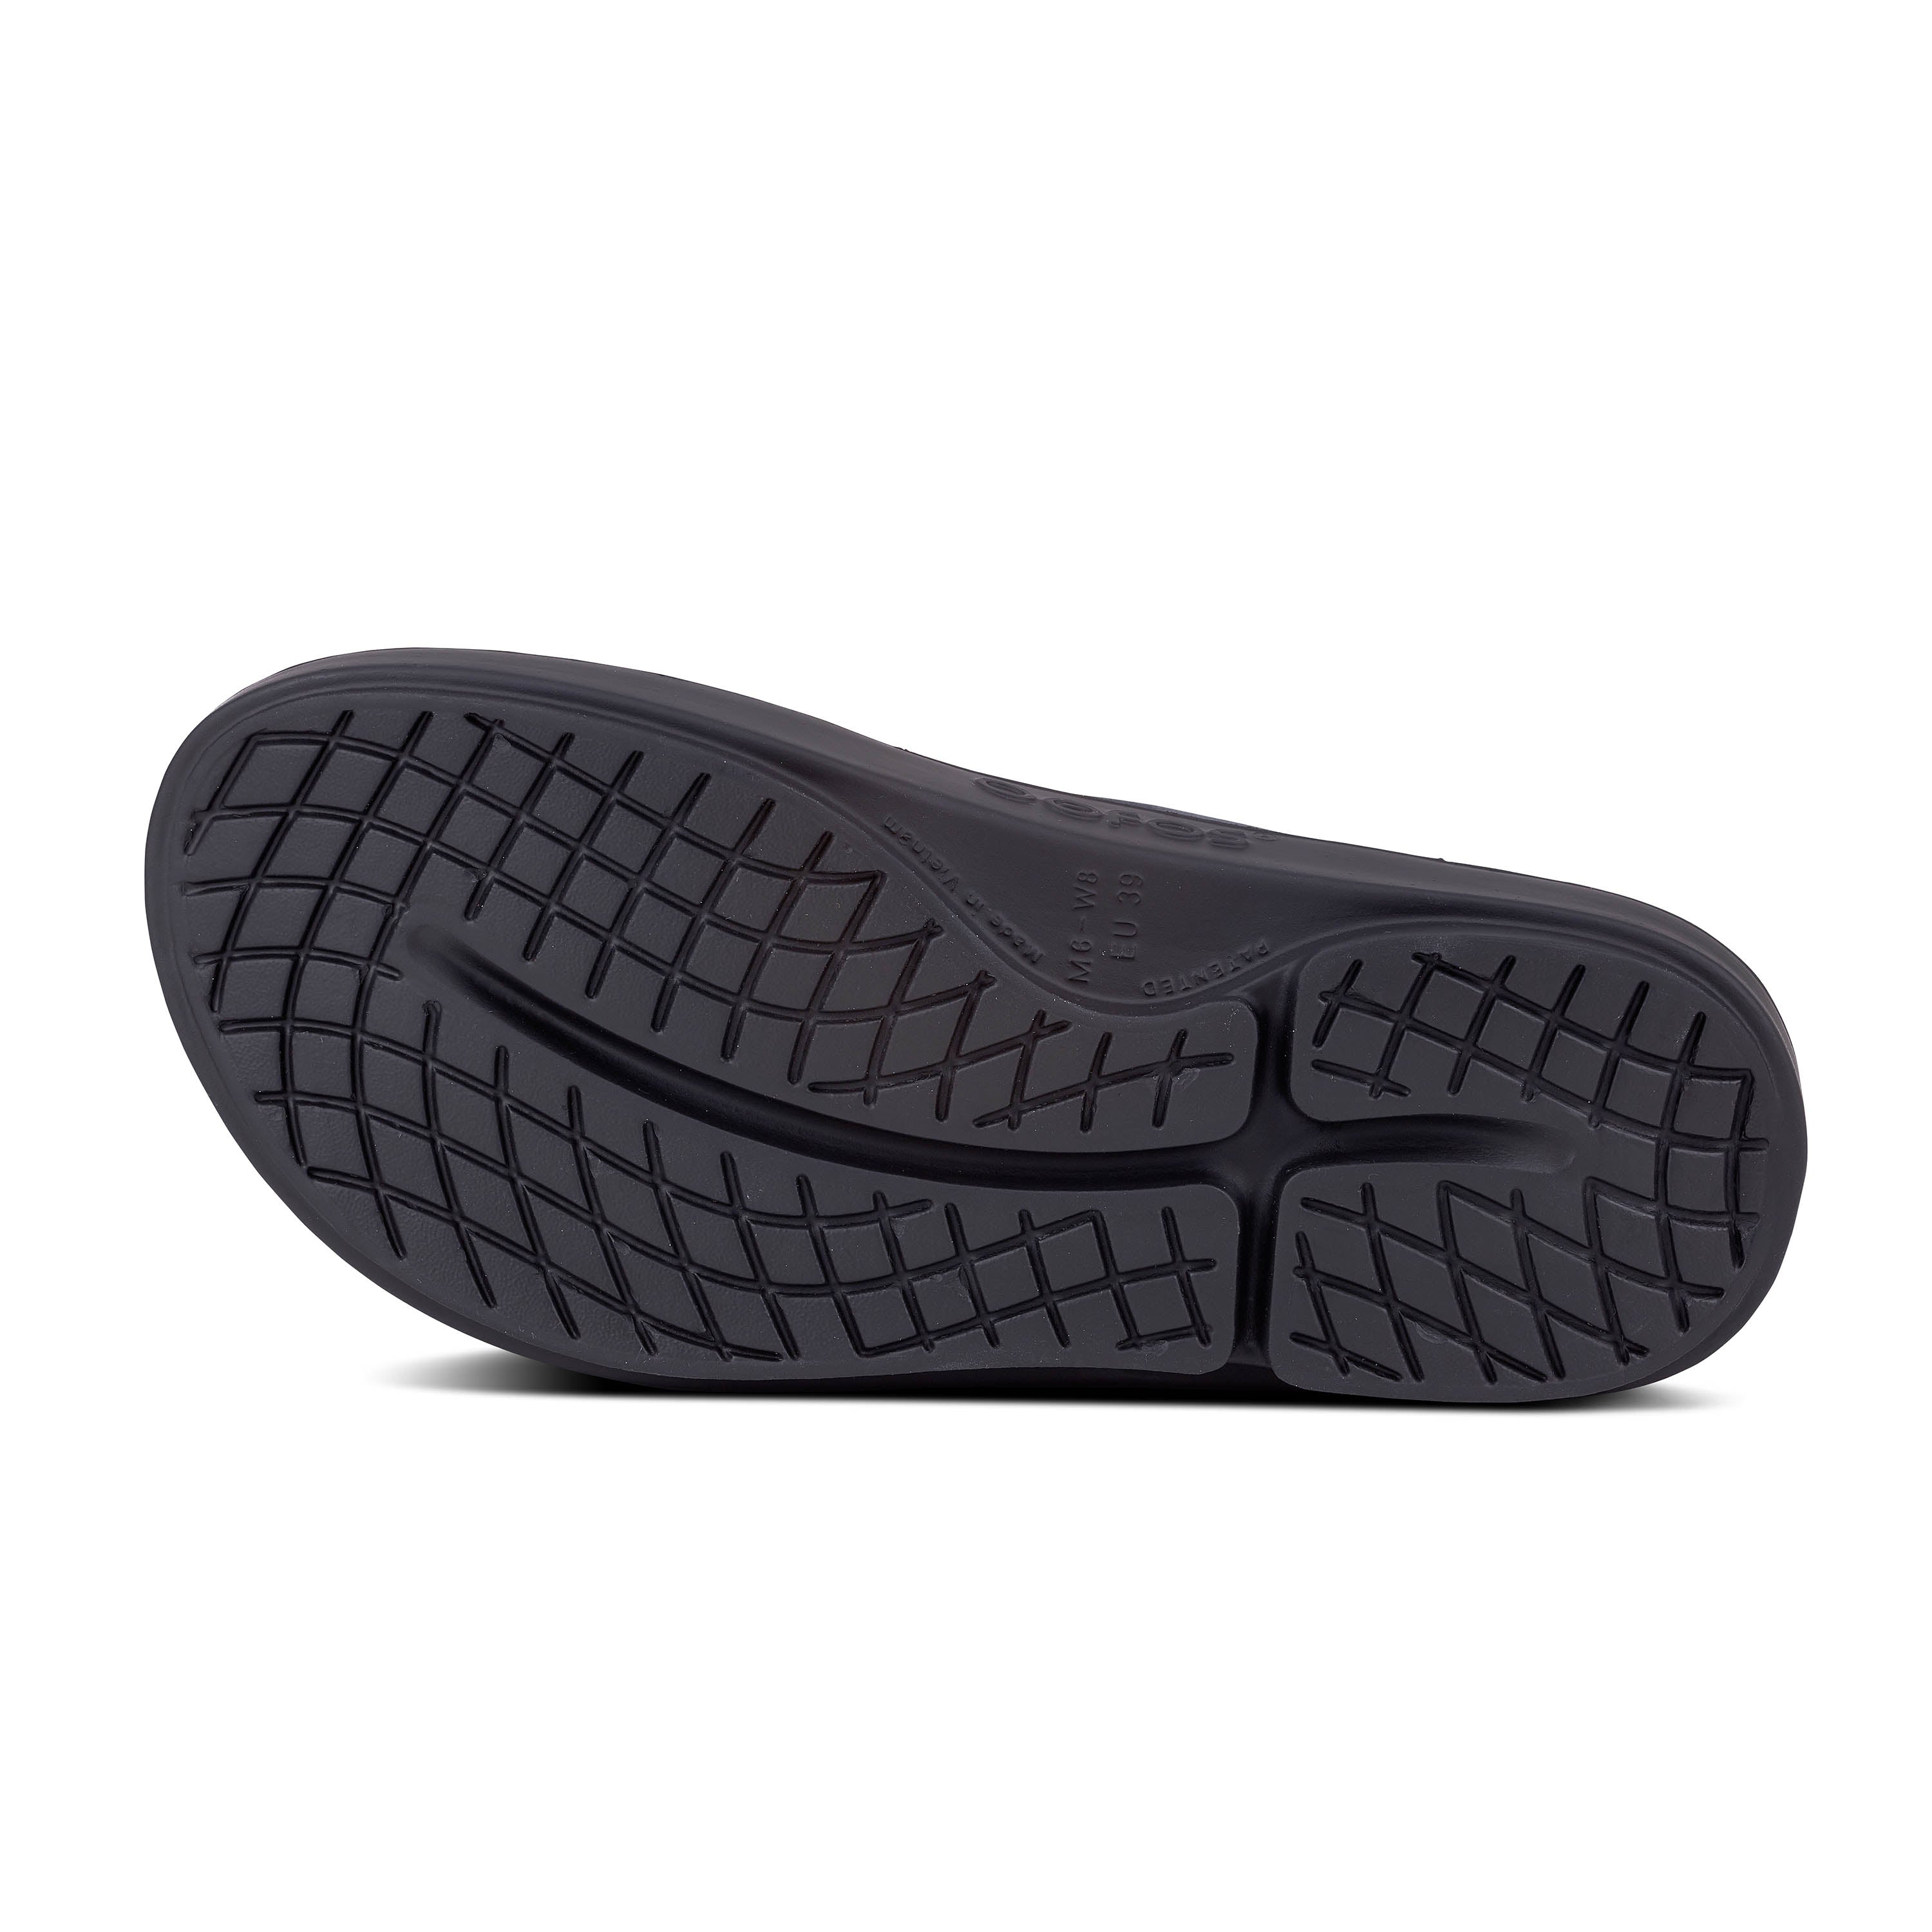 OOfos OOriginal Sport Sandal Unisex